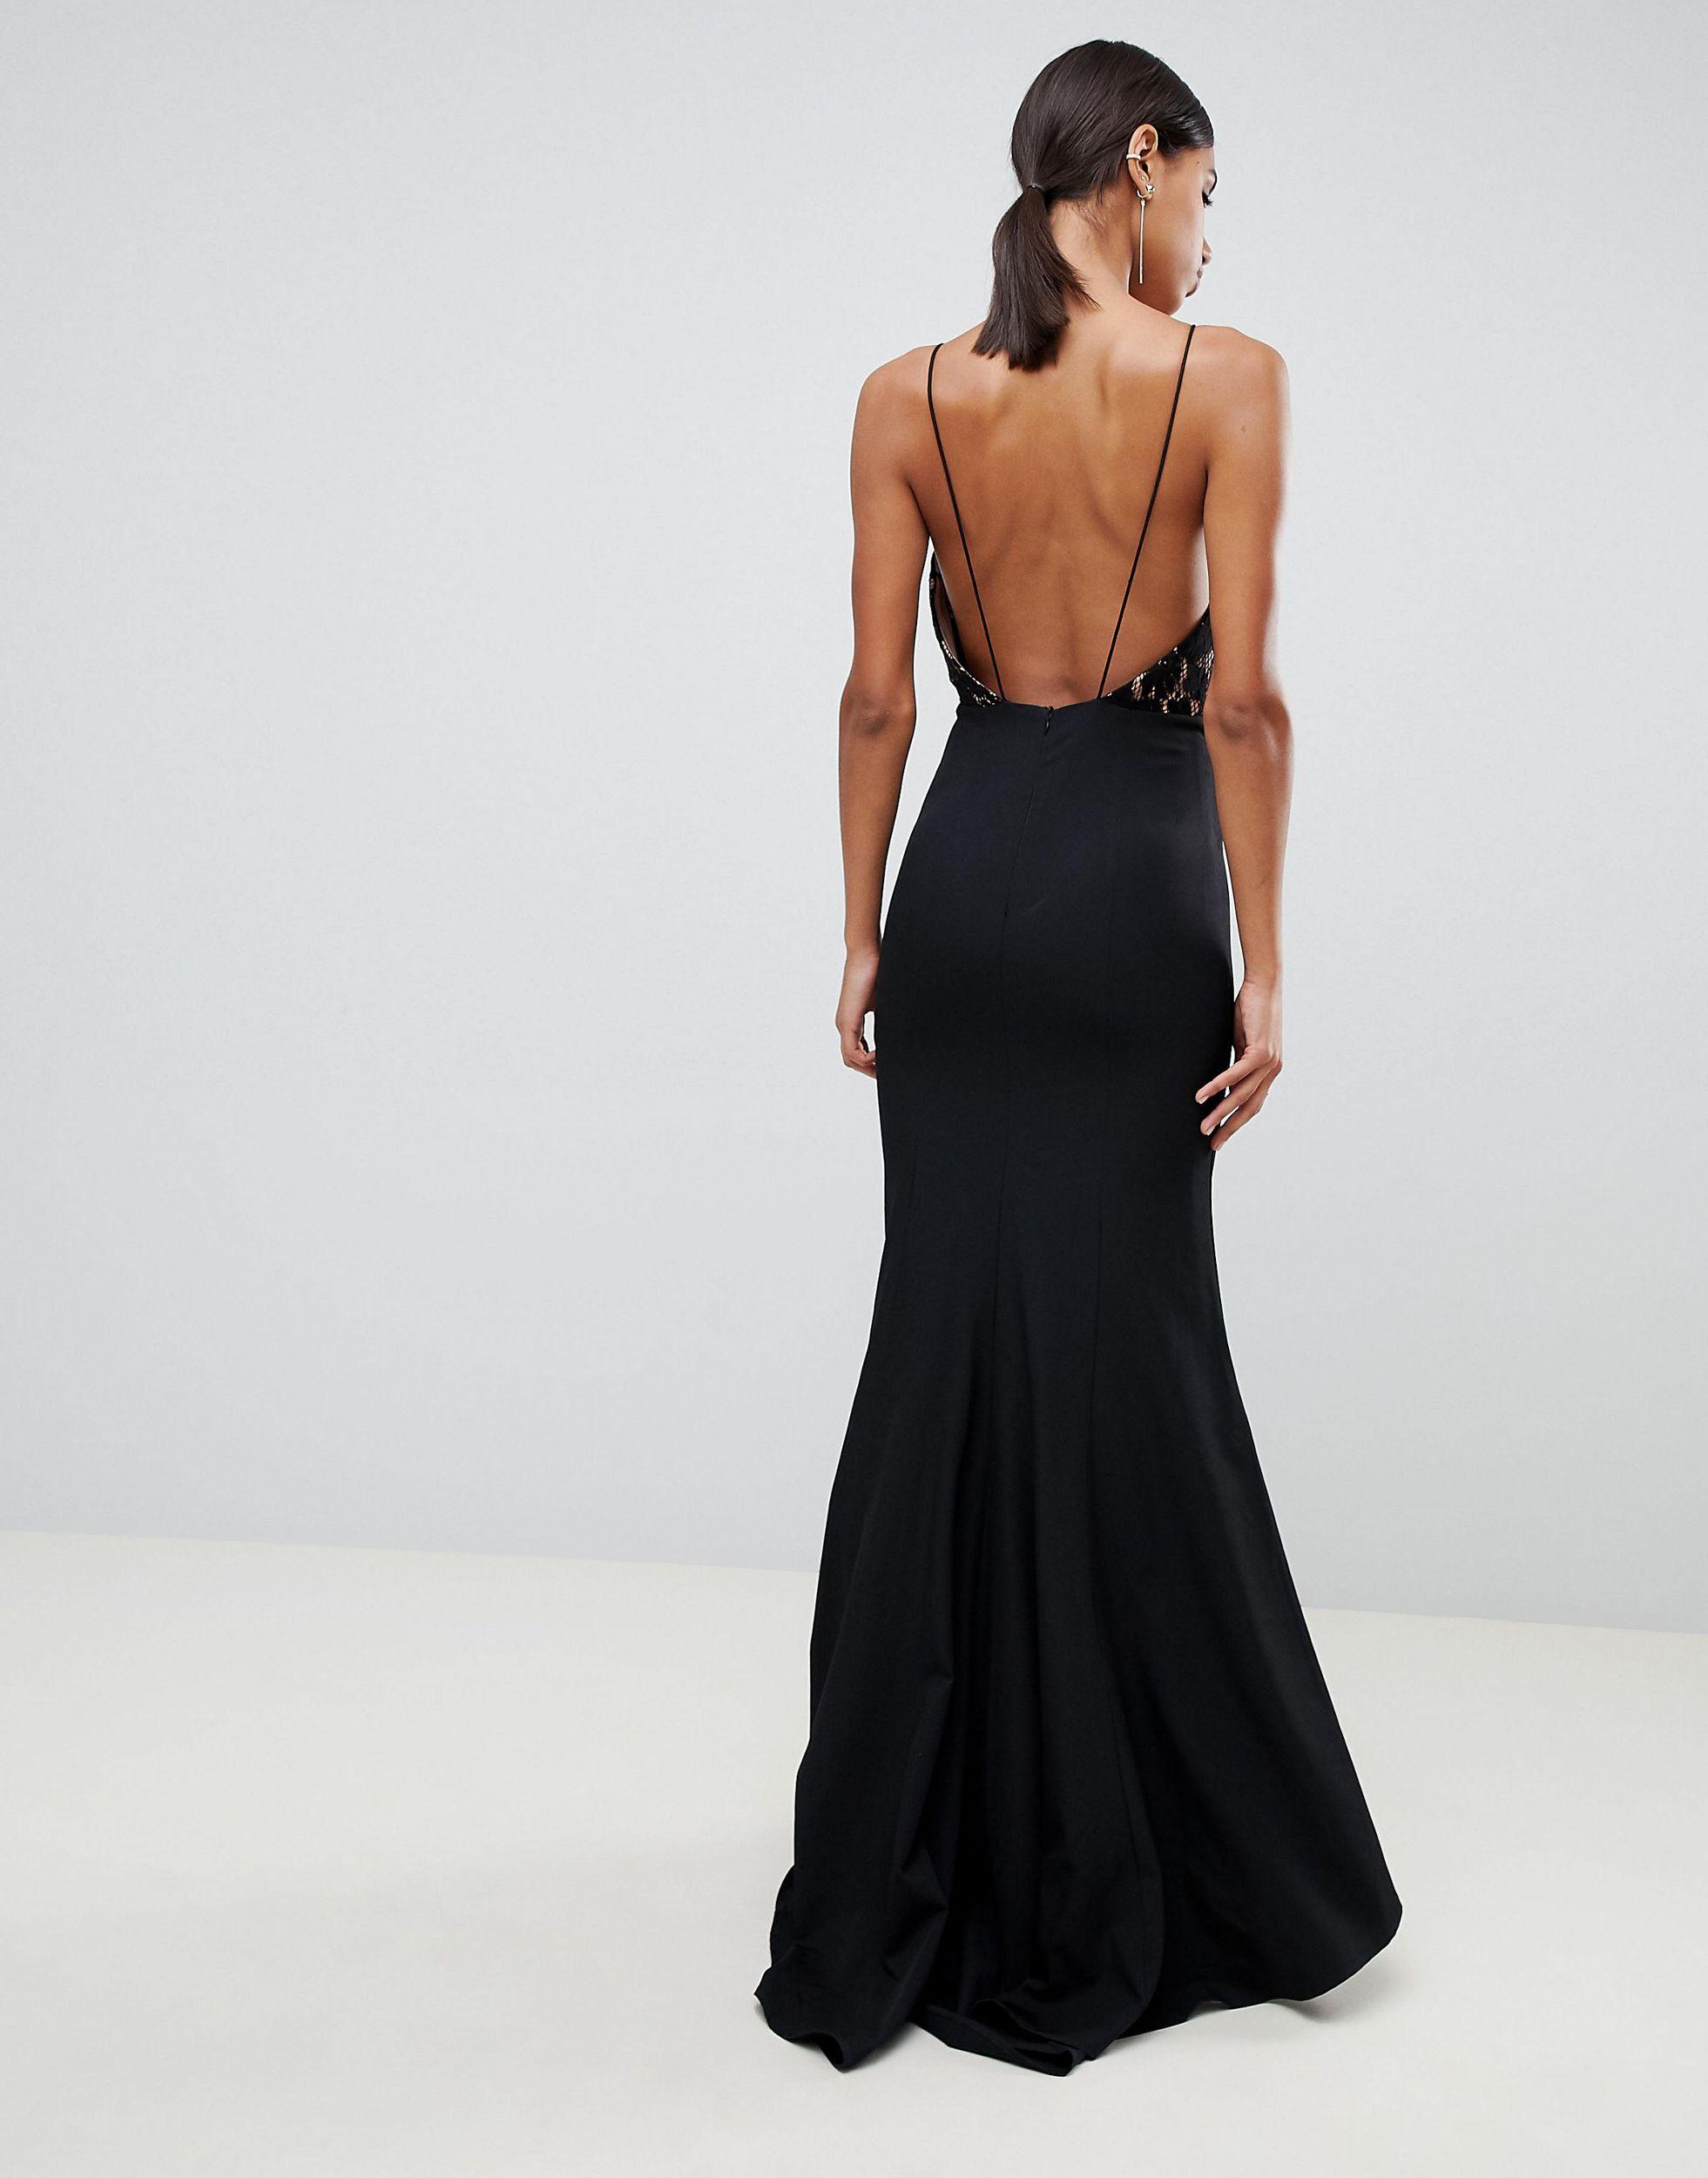 black lace embellished fishtail maxi dress